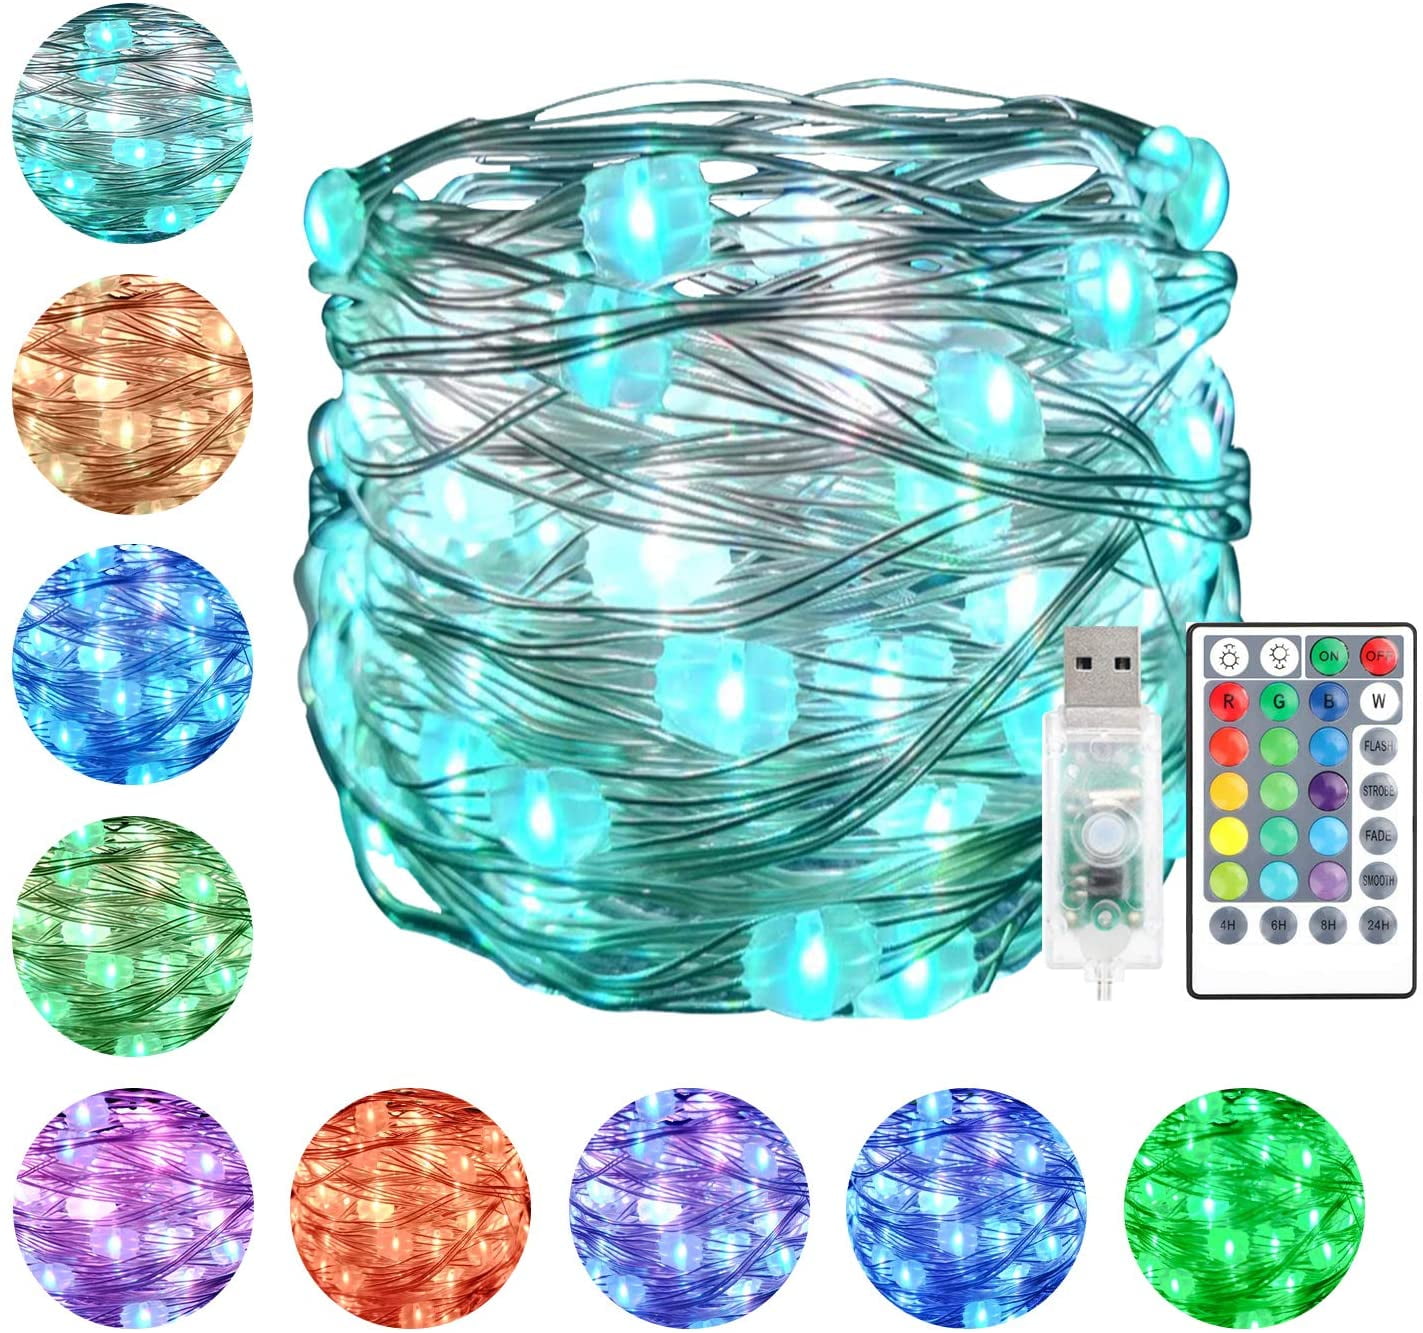 Details about   Fairy Lights USB Plug in LED String Lights Twinkle Lights Color Changing Light 